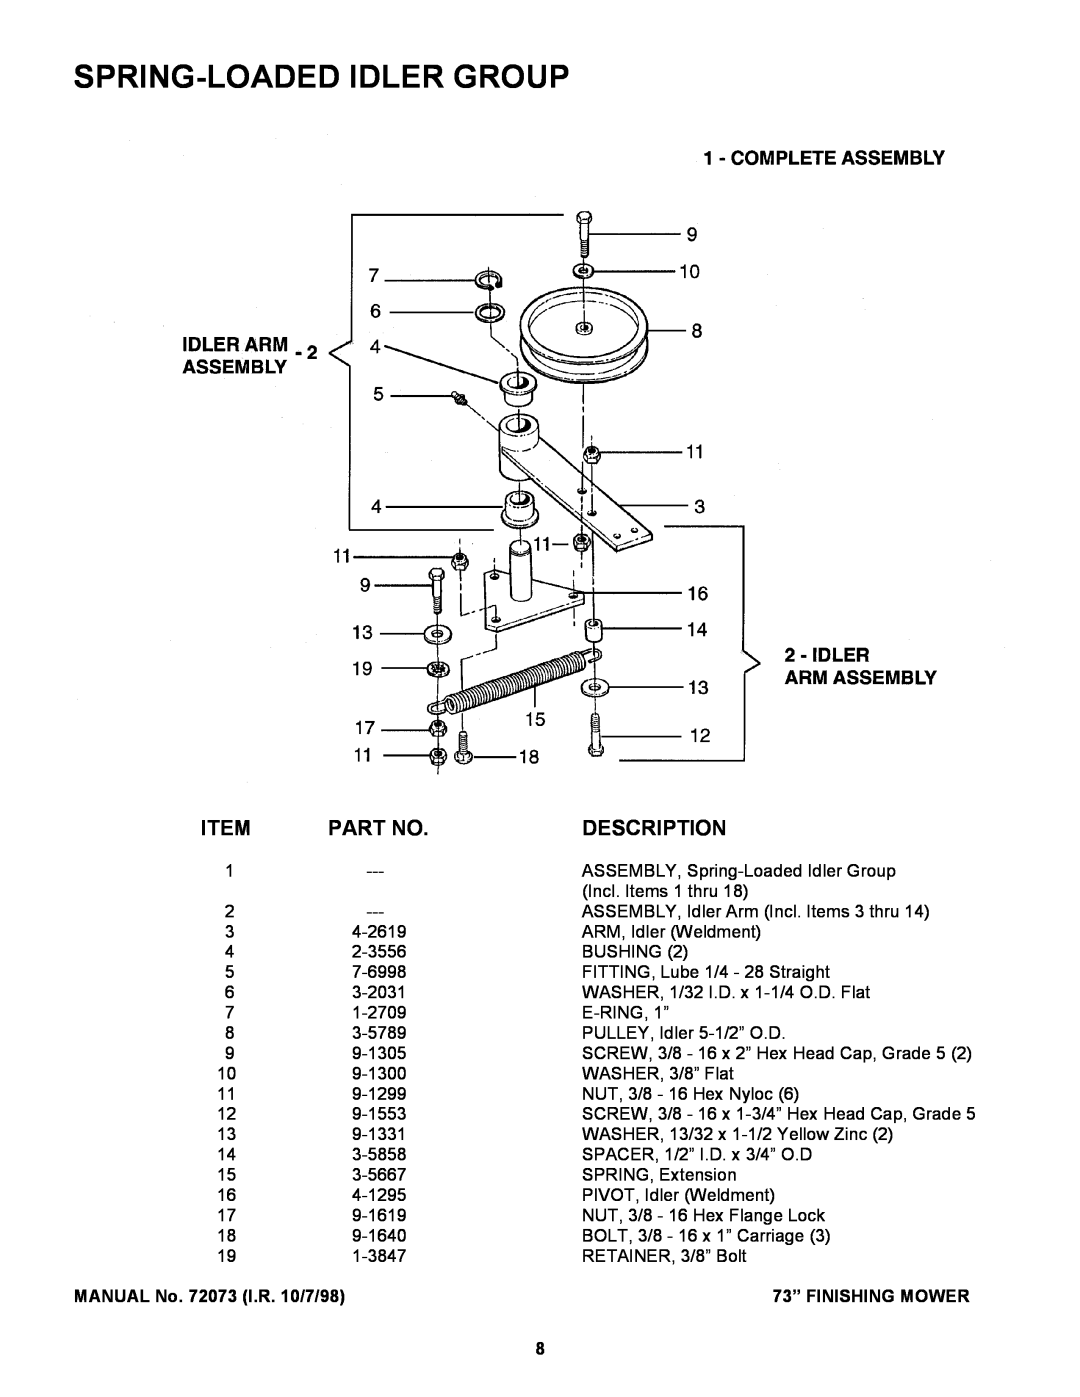 Snapper Finishing Mower manual Spring-Loadedidler Group, Item, Part No, Description 